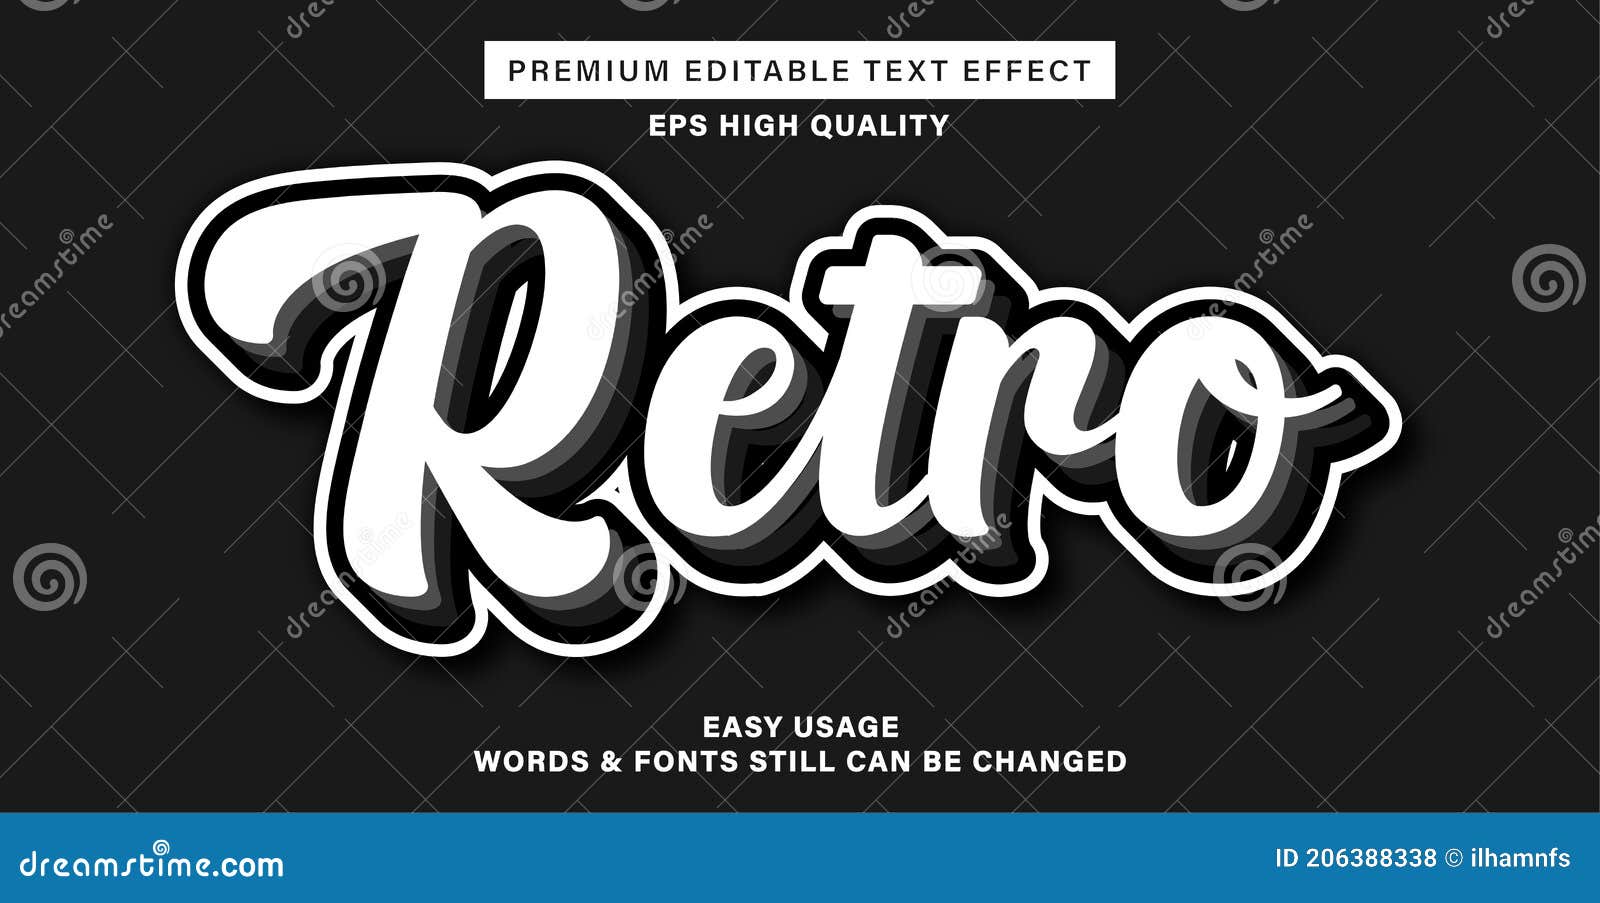 editable text effect retro style